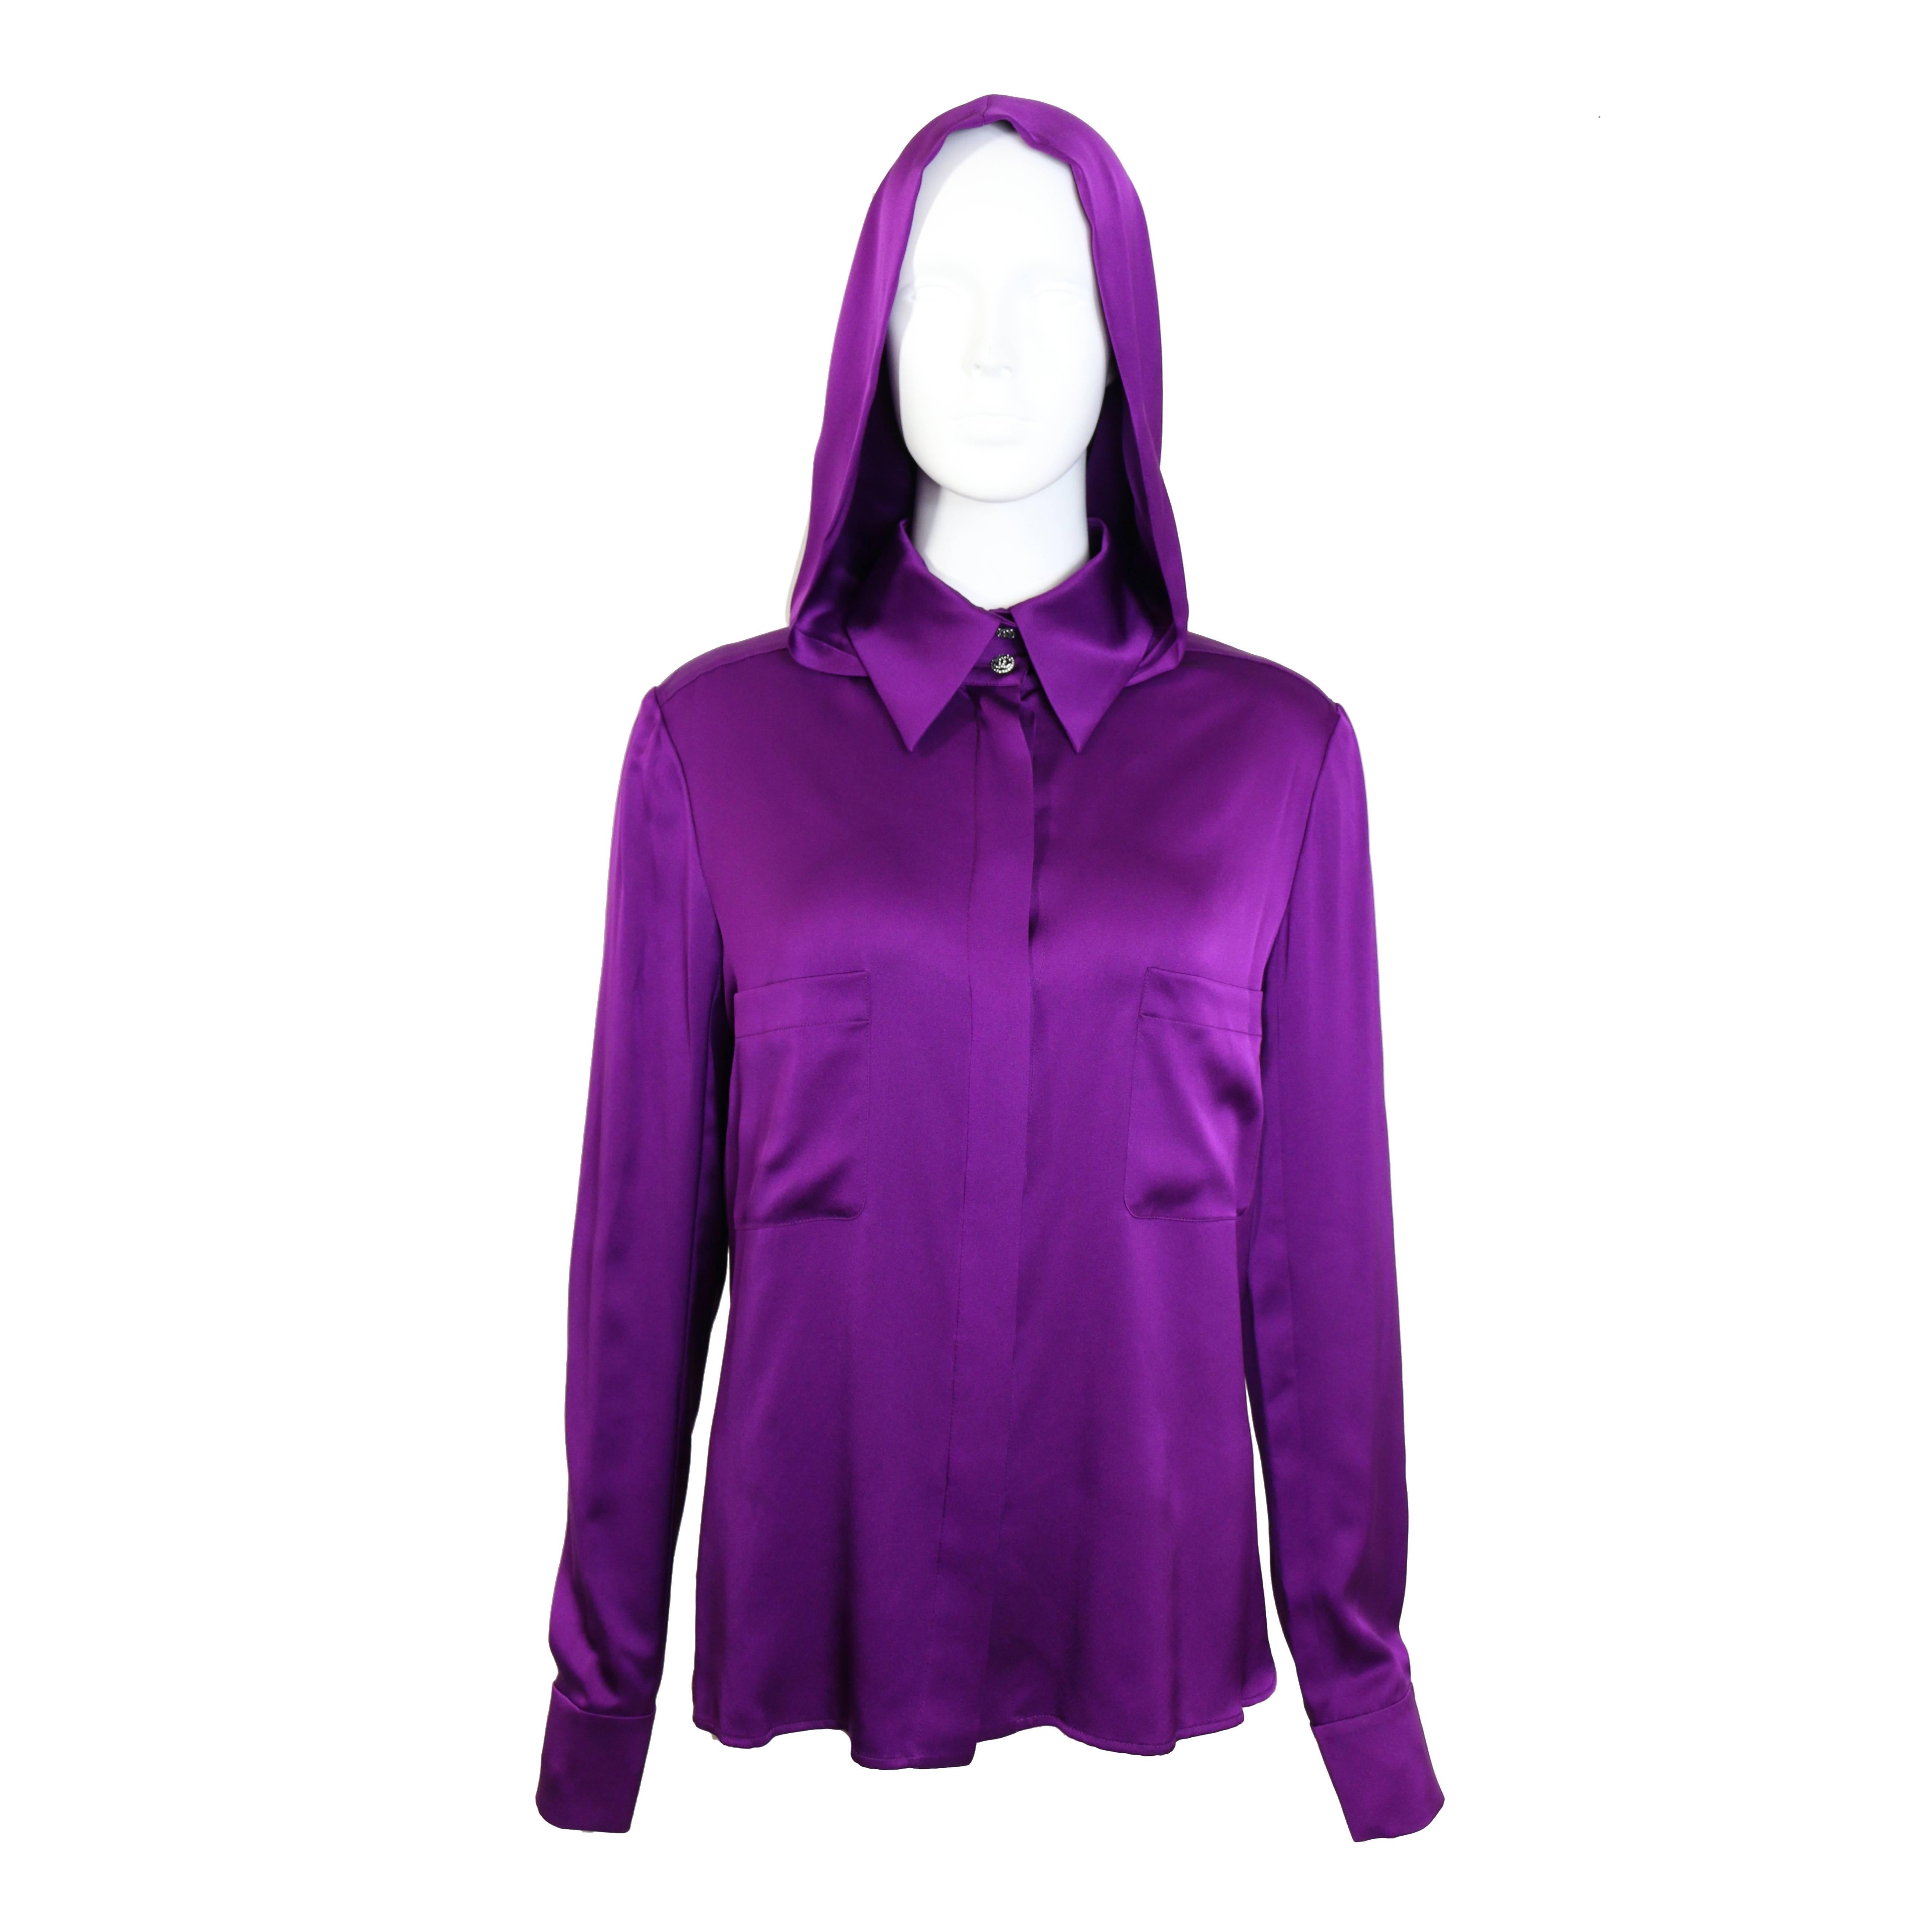 Chanel Purple Hoodie Shirt